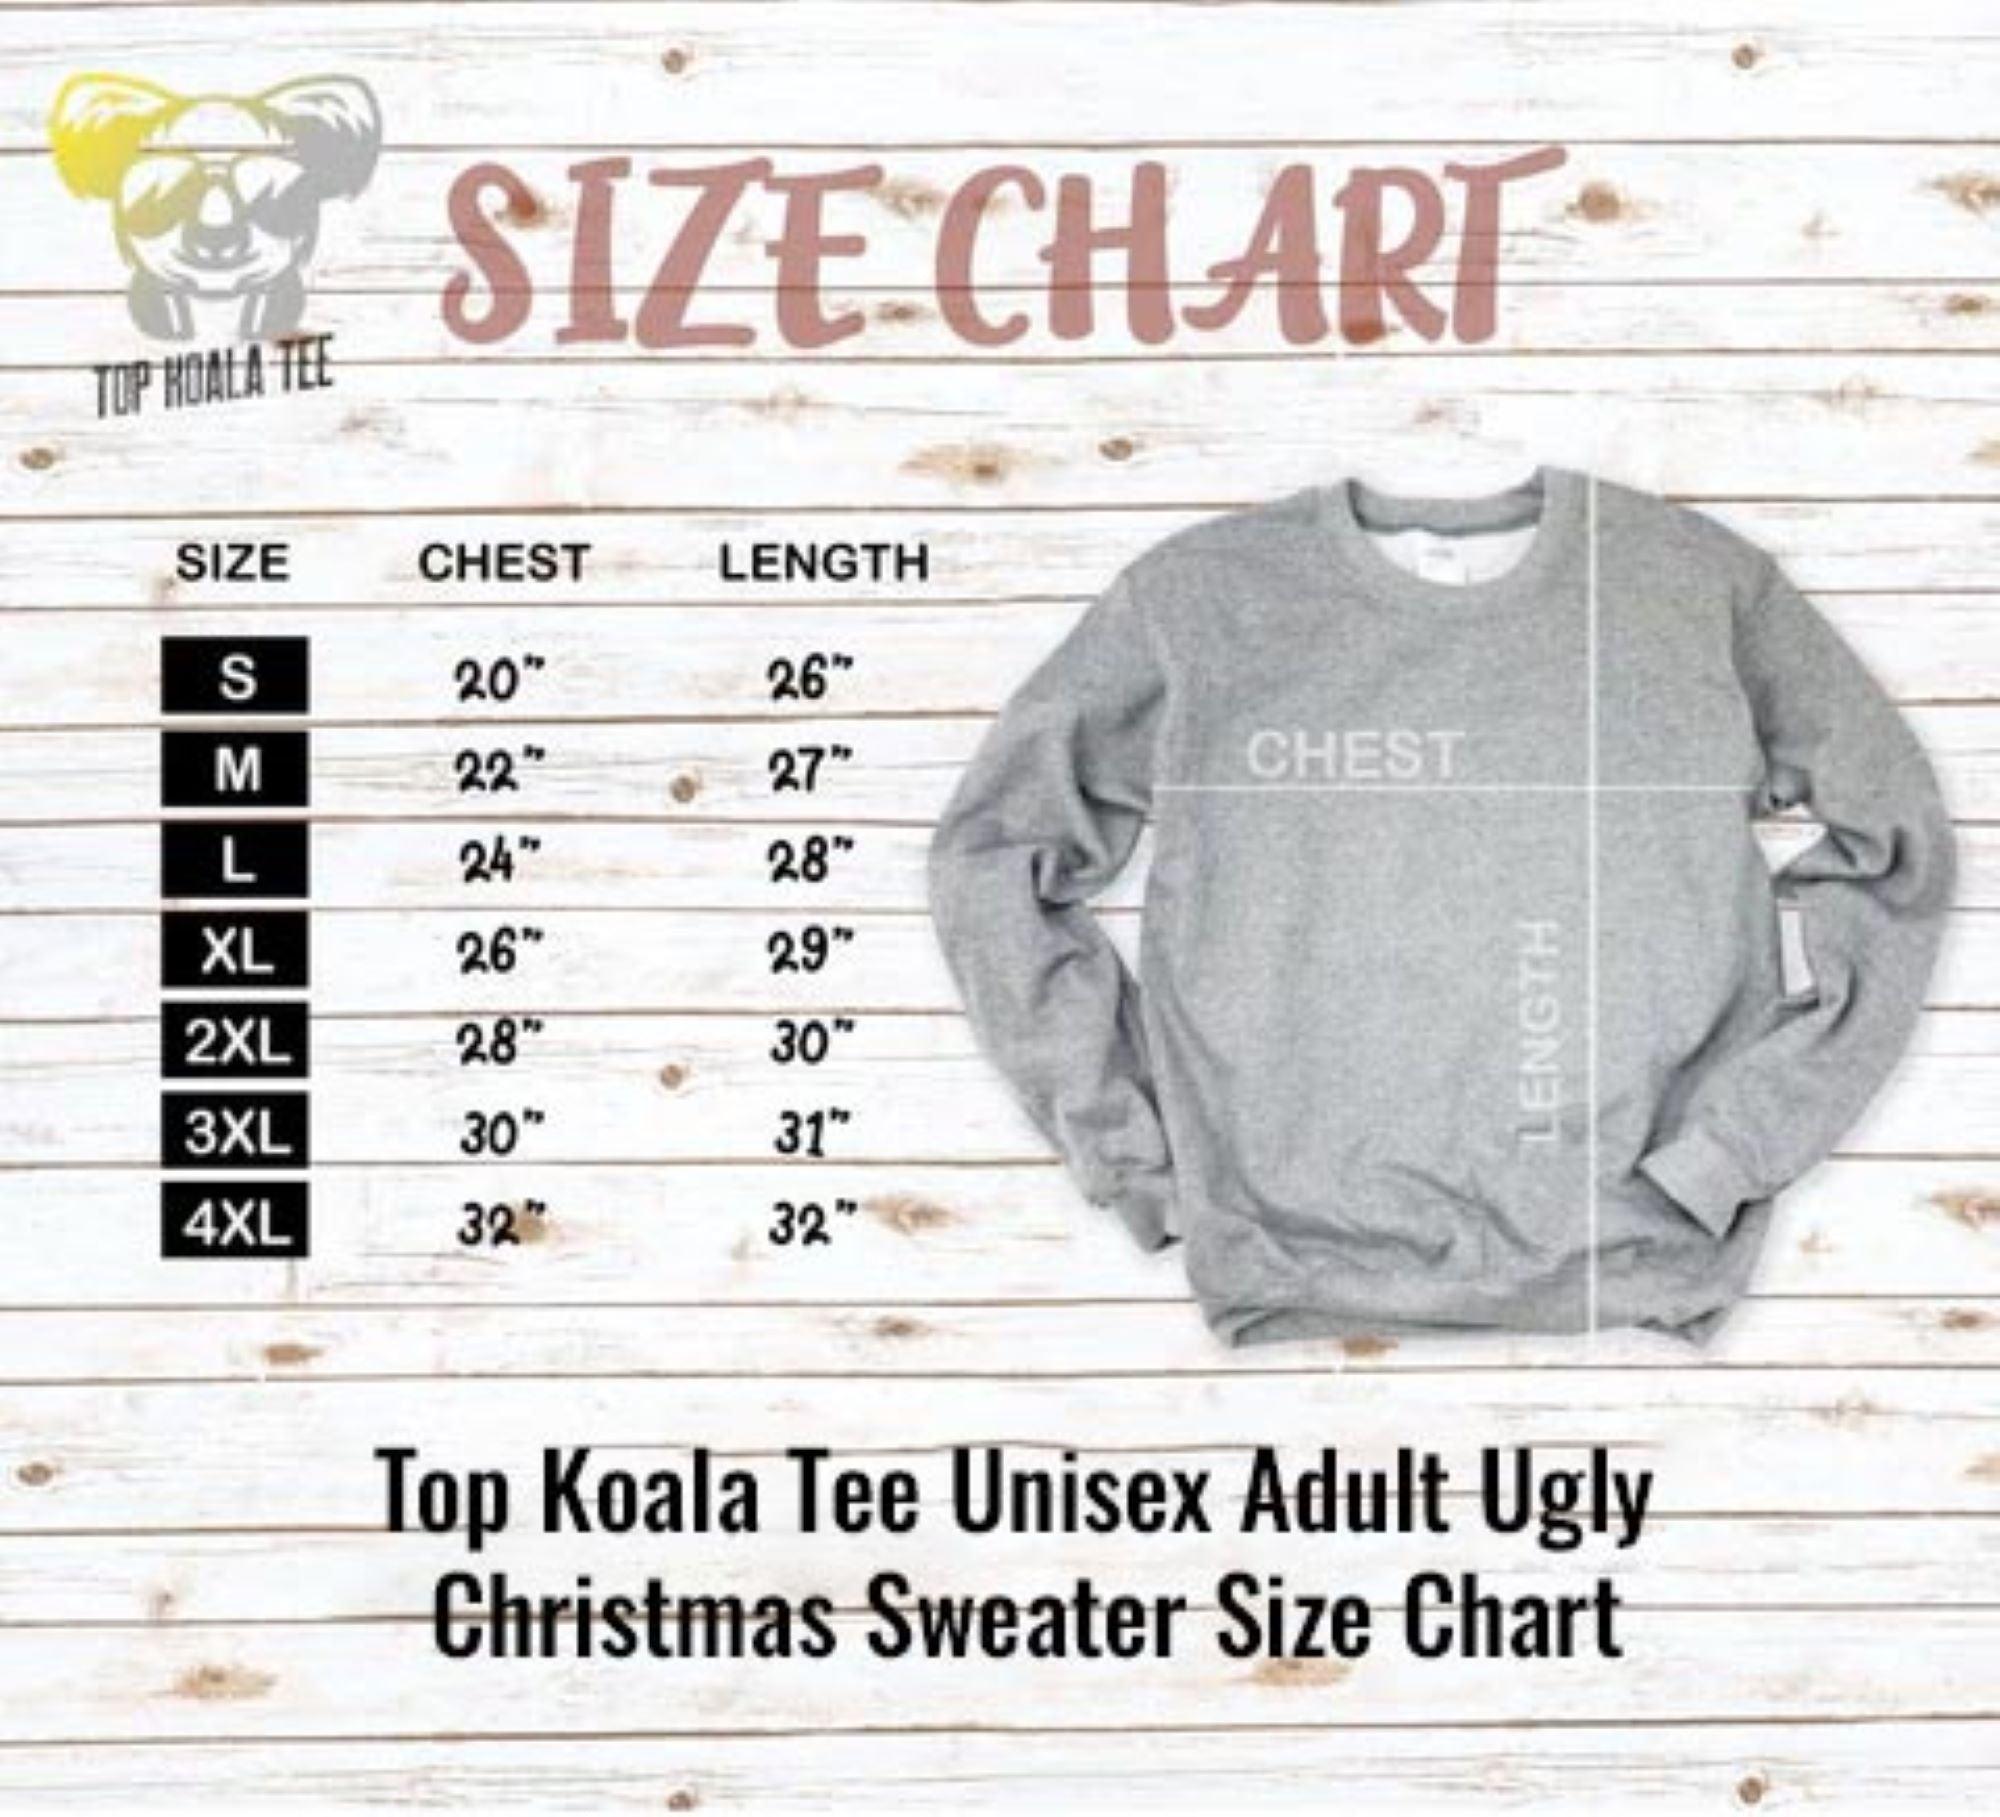 Famous TV Sitcom Ugly Christmas Sweater Top Koala Tee - TopKoalaTee